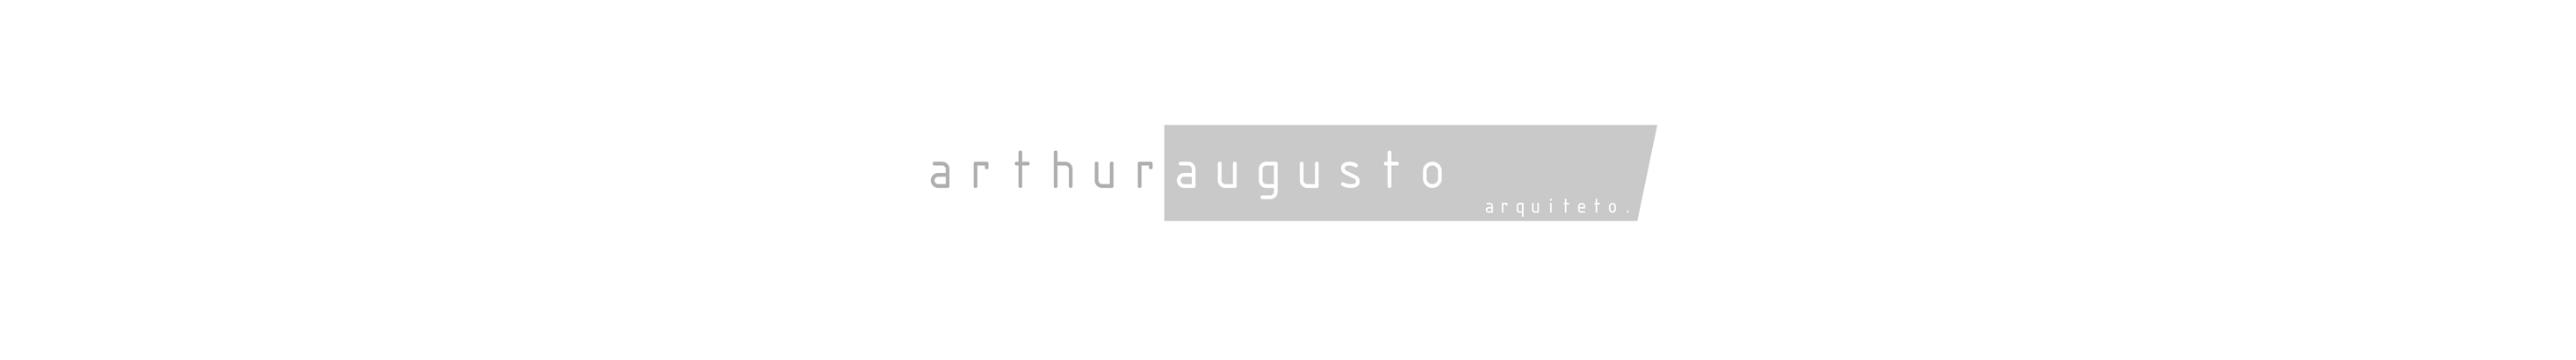 Arthur Augusto Arquiteto's profile banner